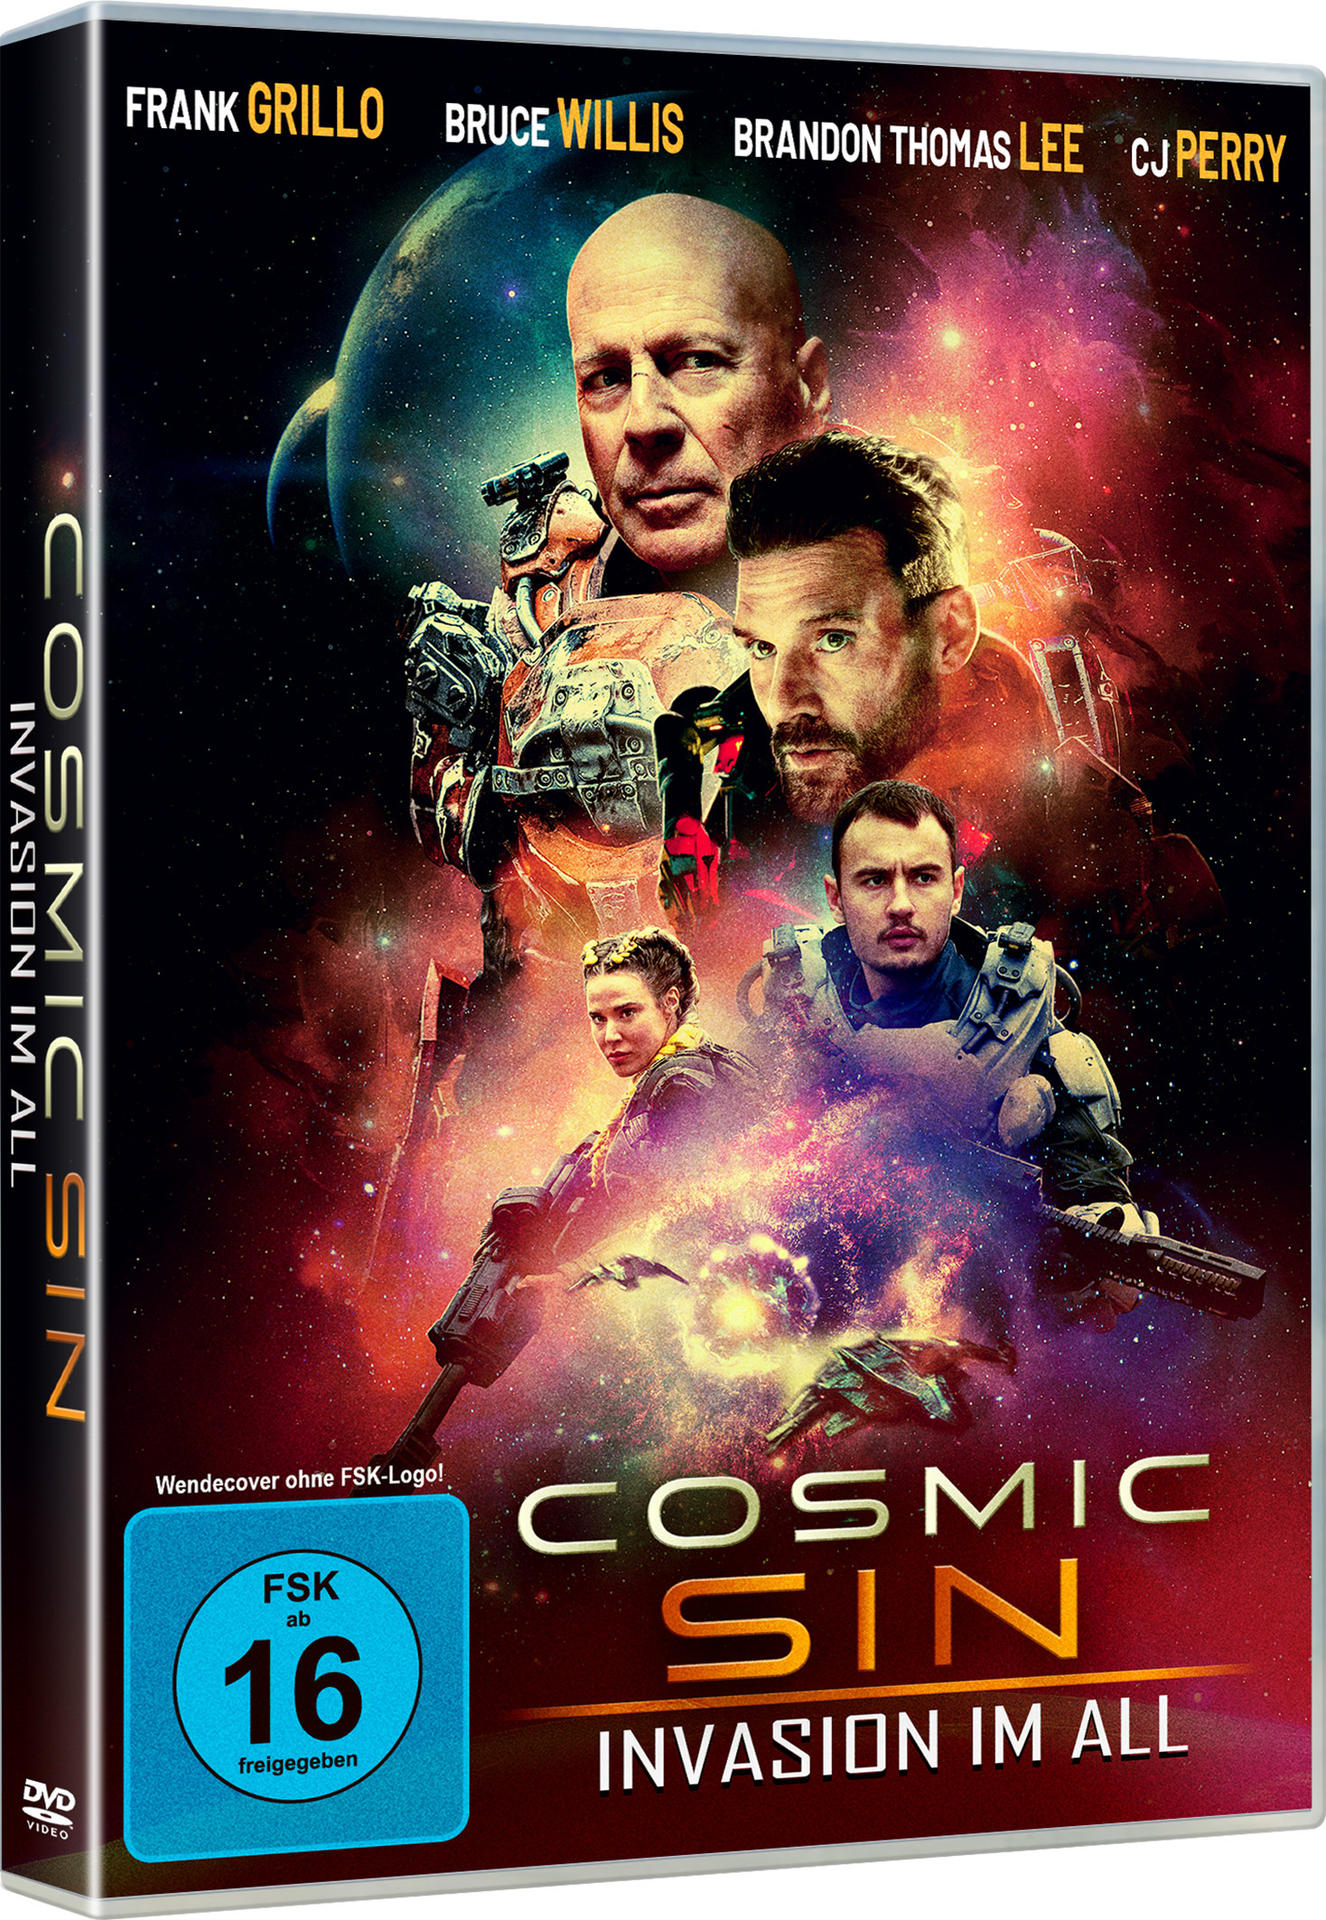 Cosmic Sin - DVD All im Invasion